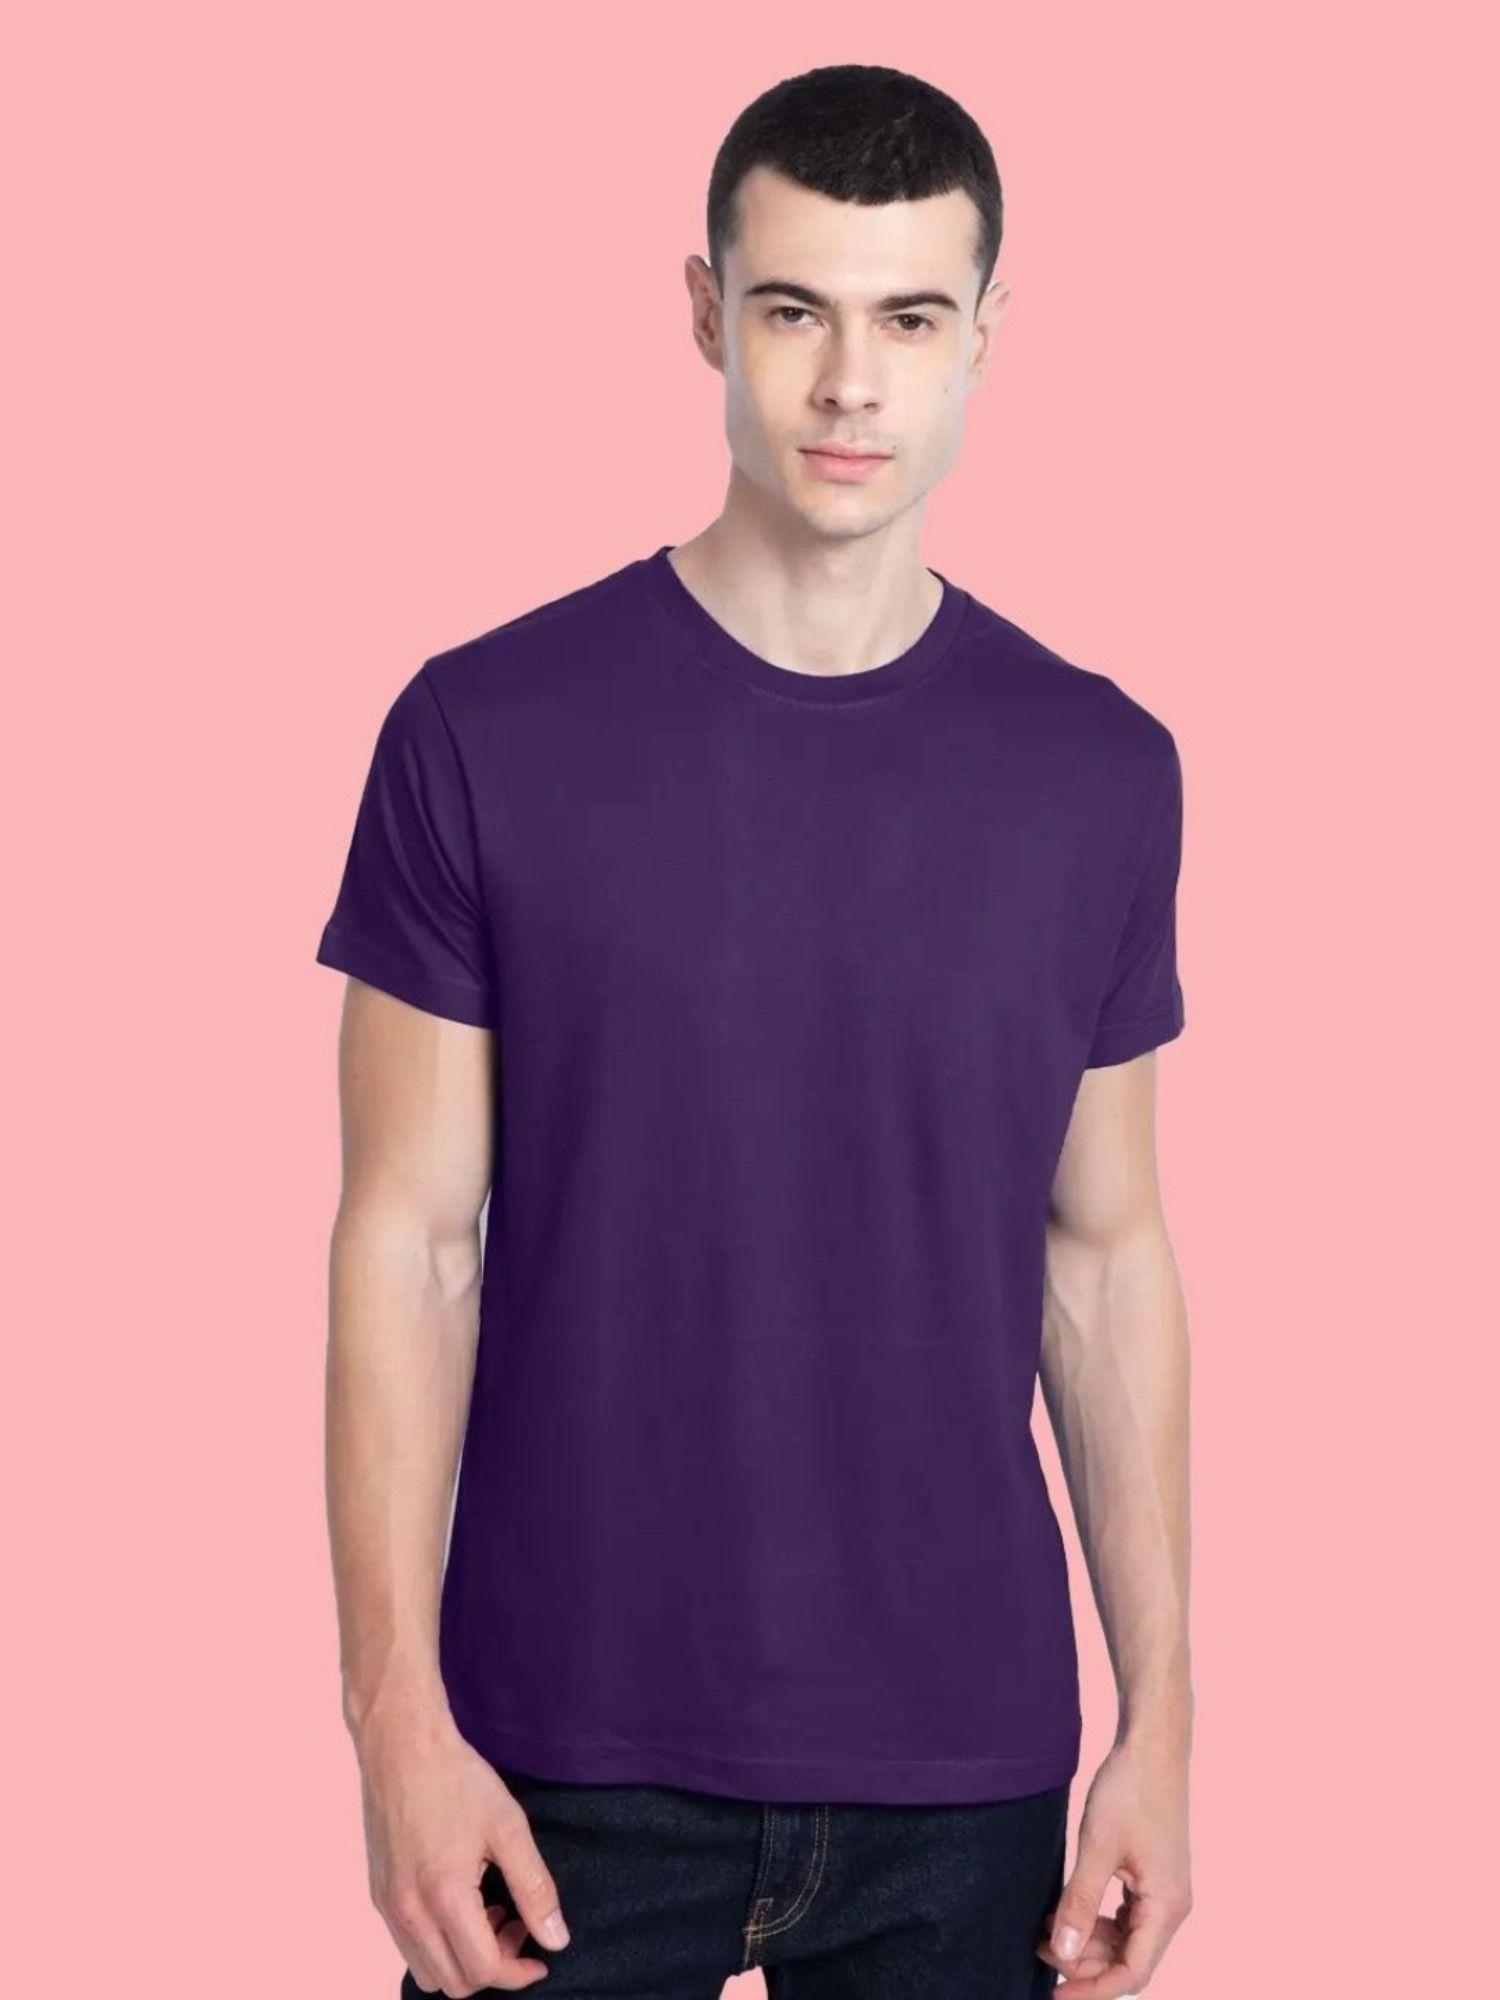 men's purple solid regular t-shirts